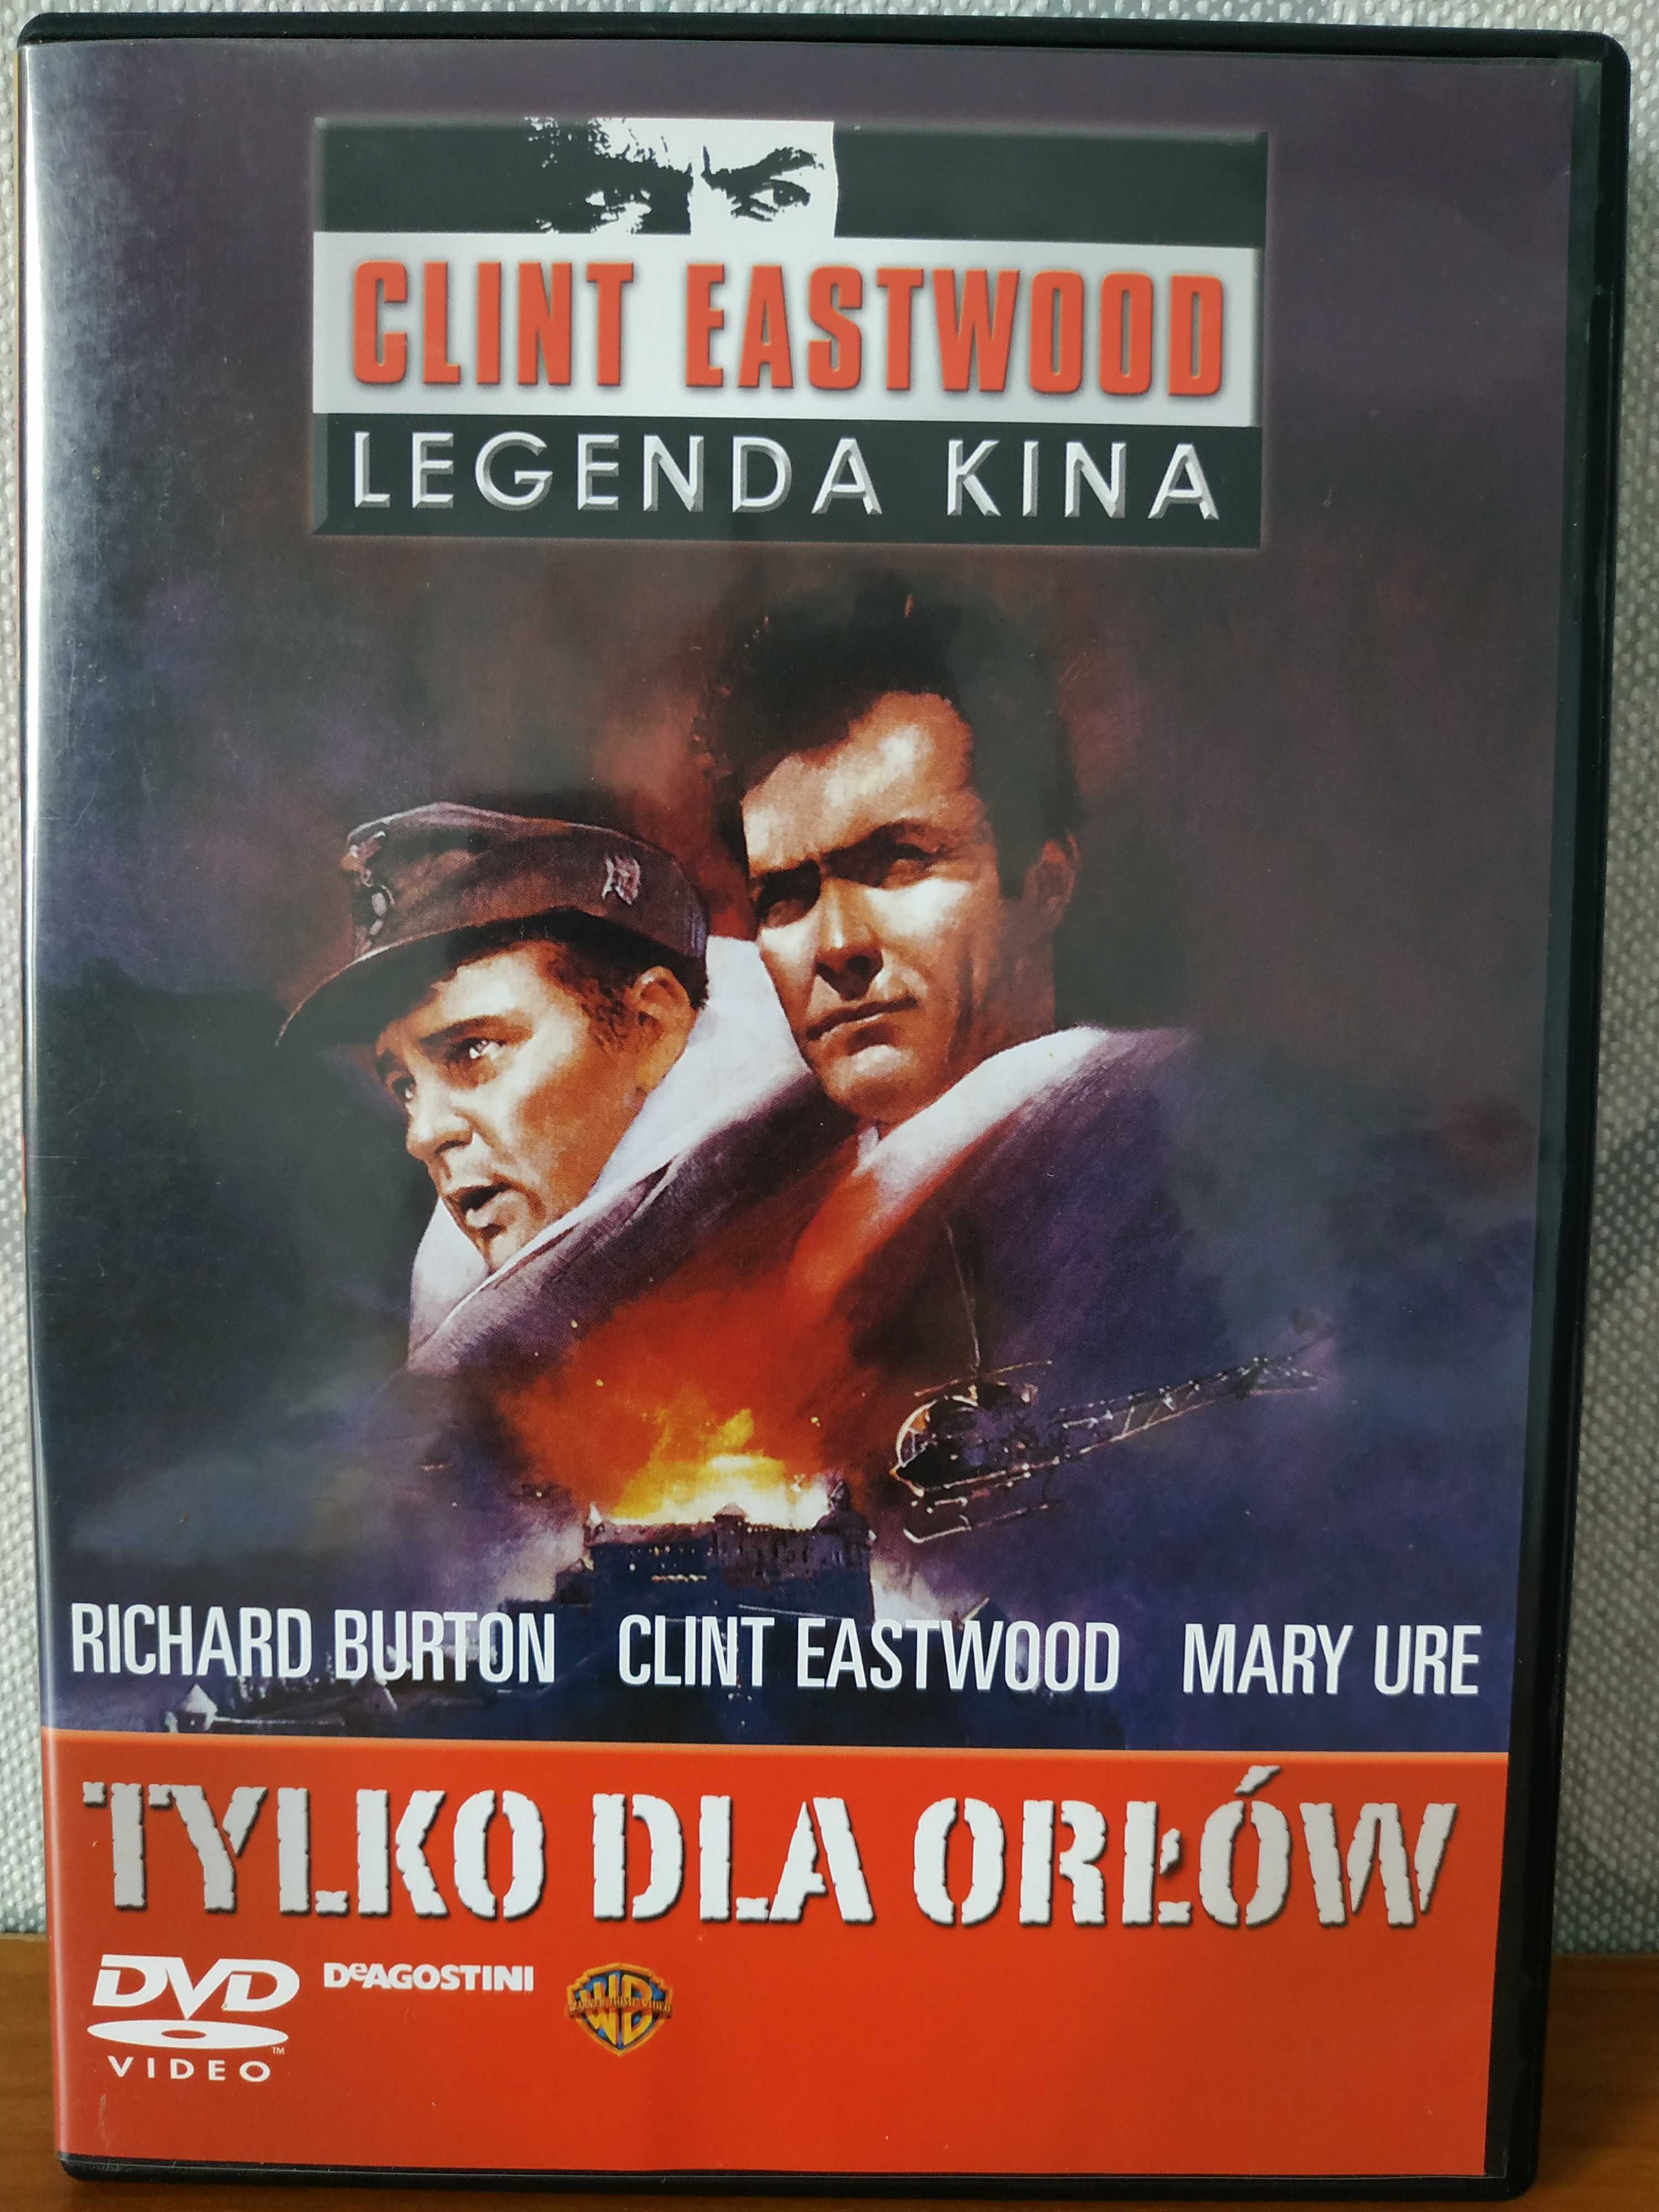 Brudny Harry i Tylko dla orłów - Clint Eastwood DVD